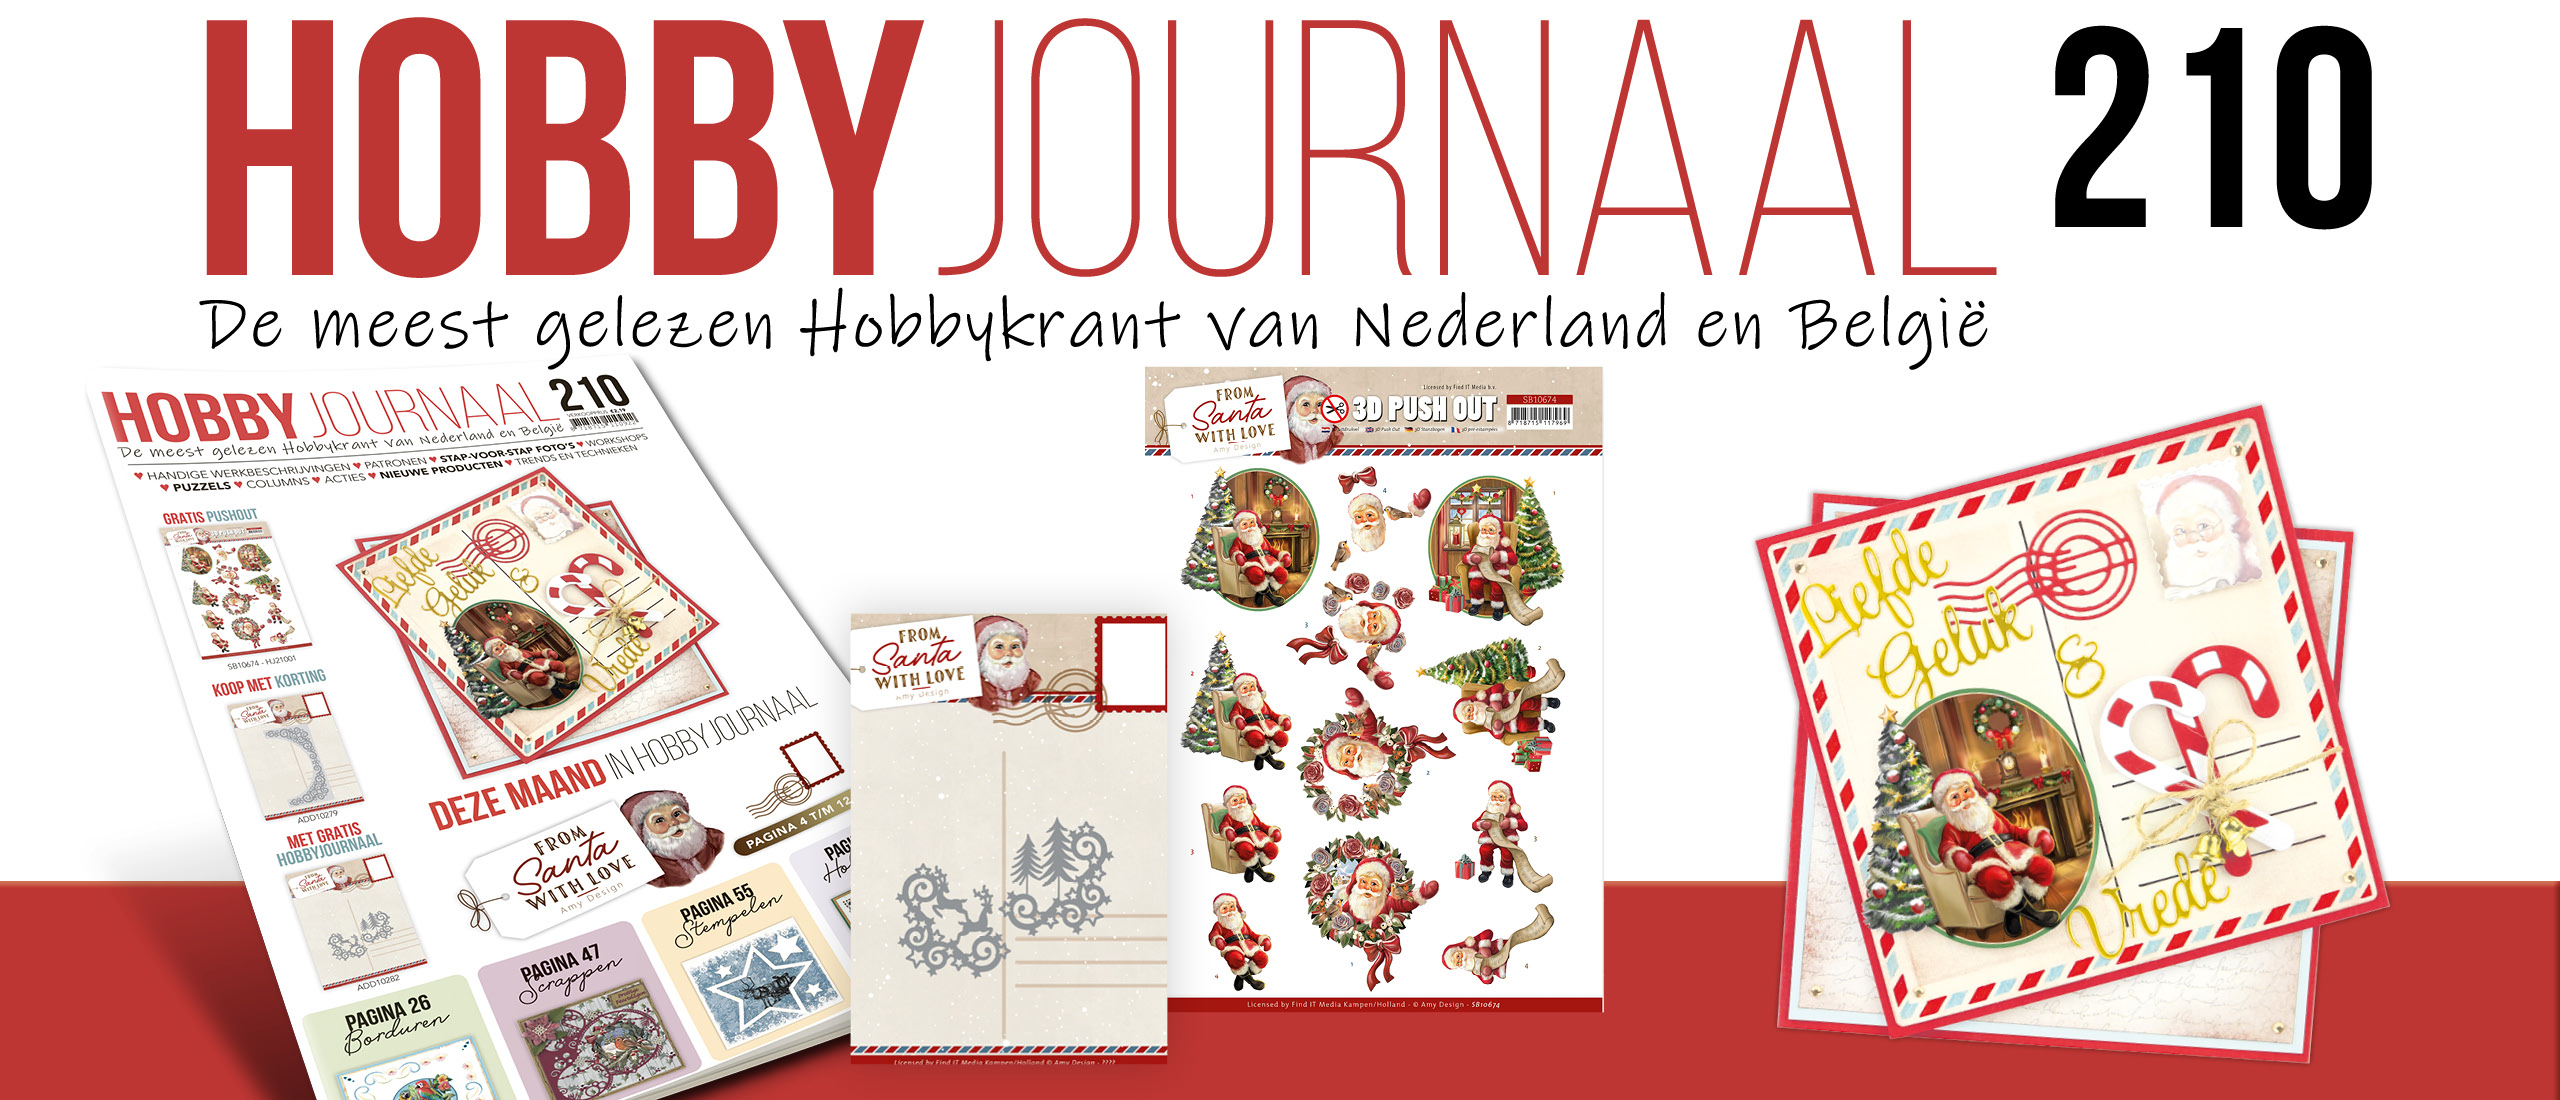 Hobbyjournaal 210 is nu verkrijgbaar!